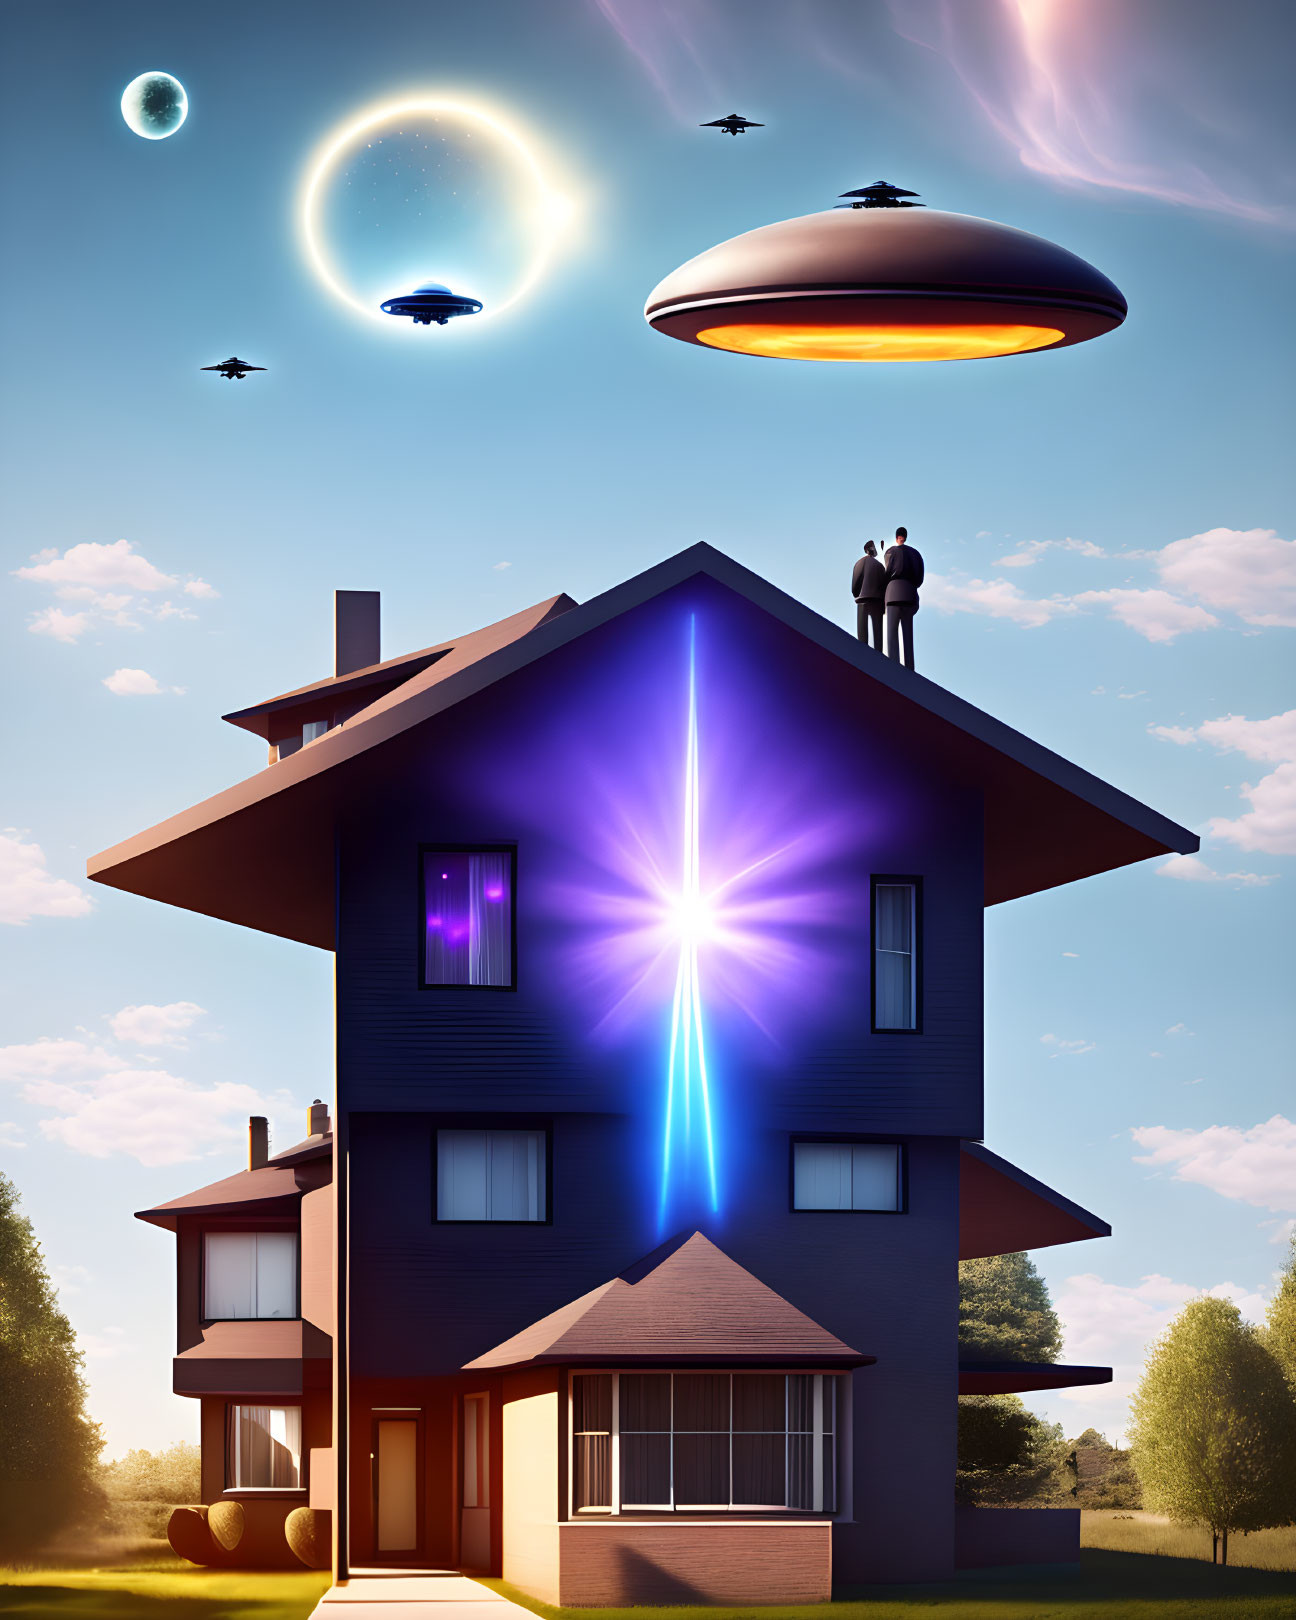 UFOs above a house contactee